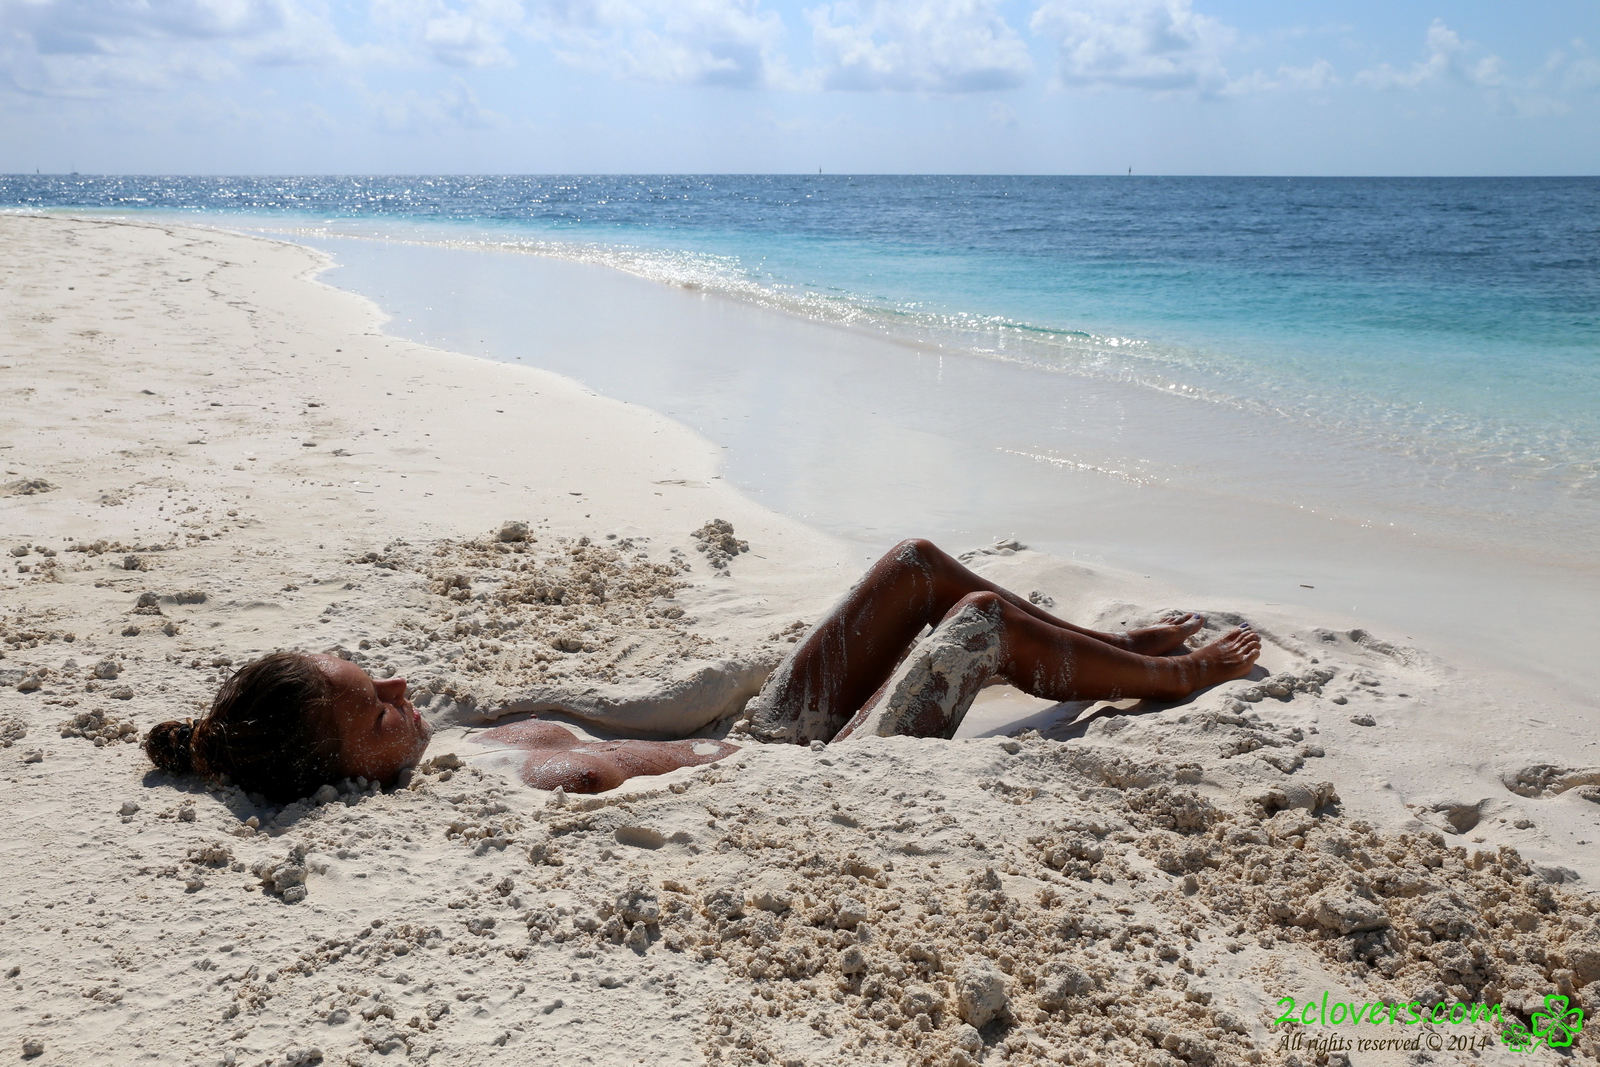 katya-clover-naked-on-sirena-beach-seaside-2clovers-40